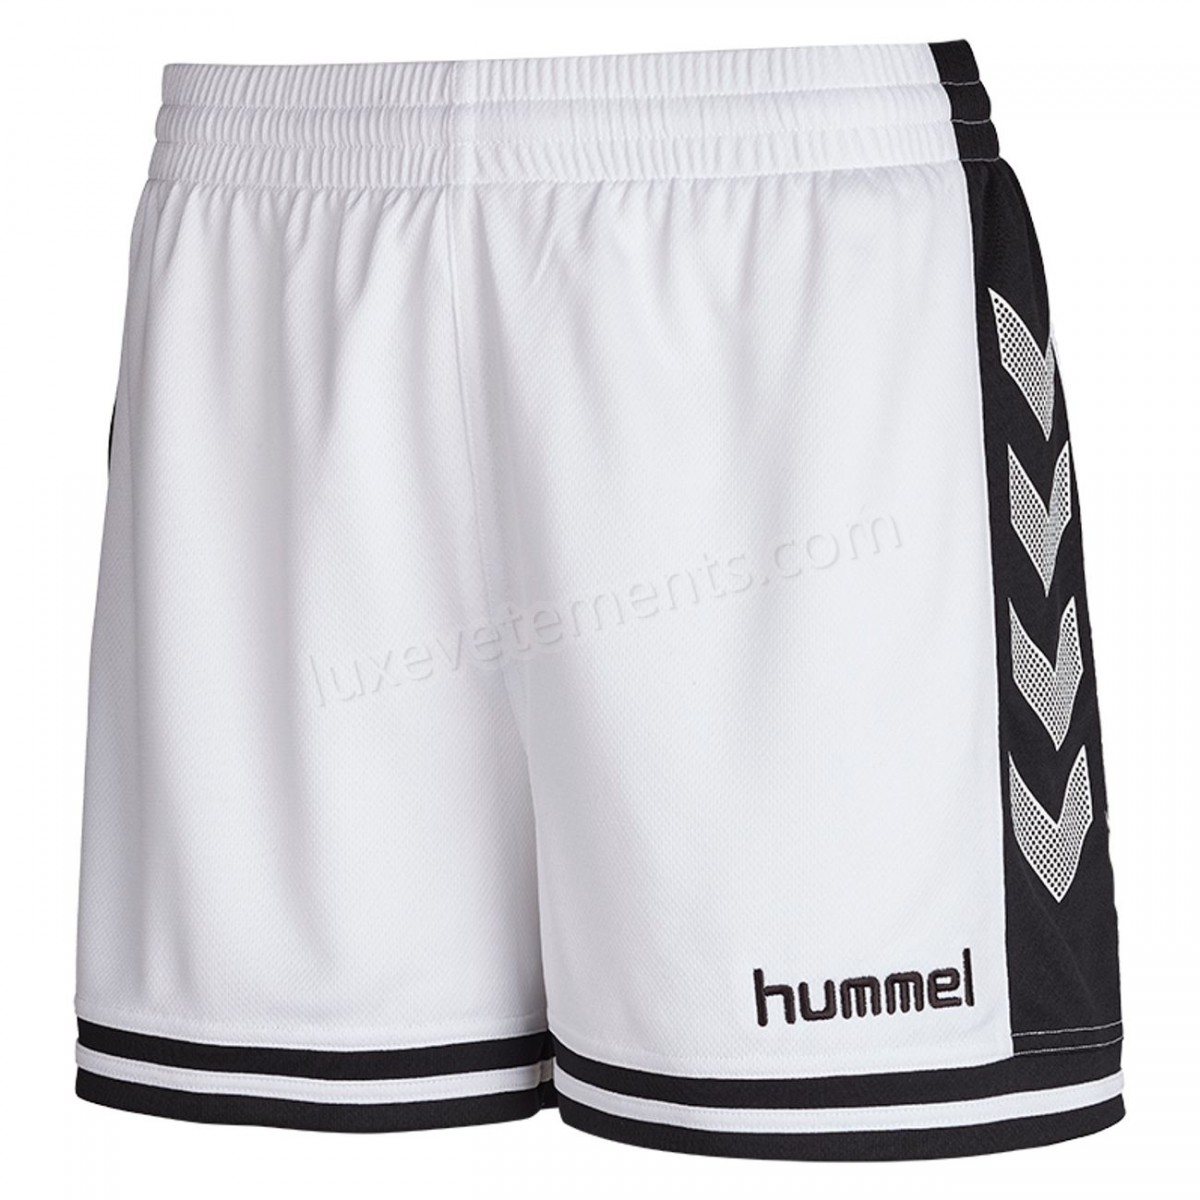 Hummel-Fitness femme HUMMEL Short femme Hummel sirius Vente en ligne - -2